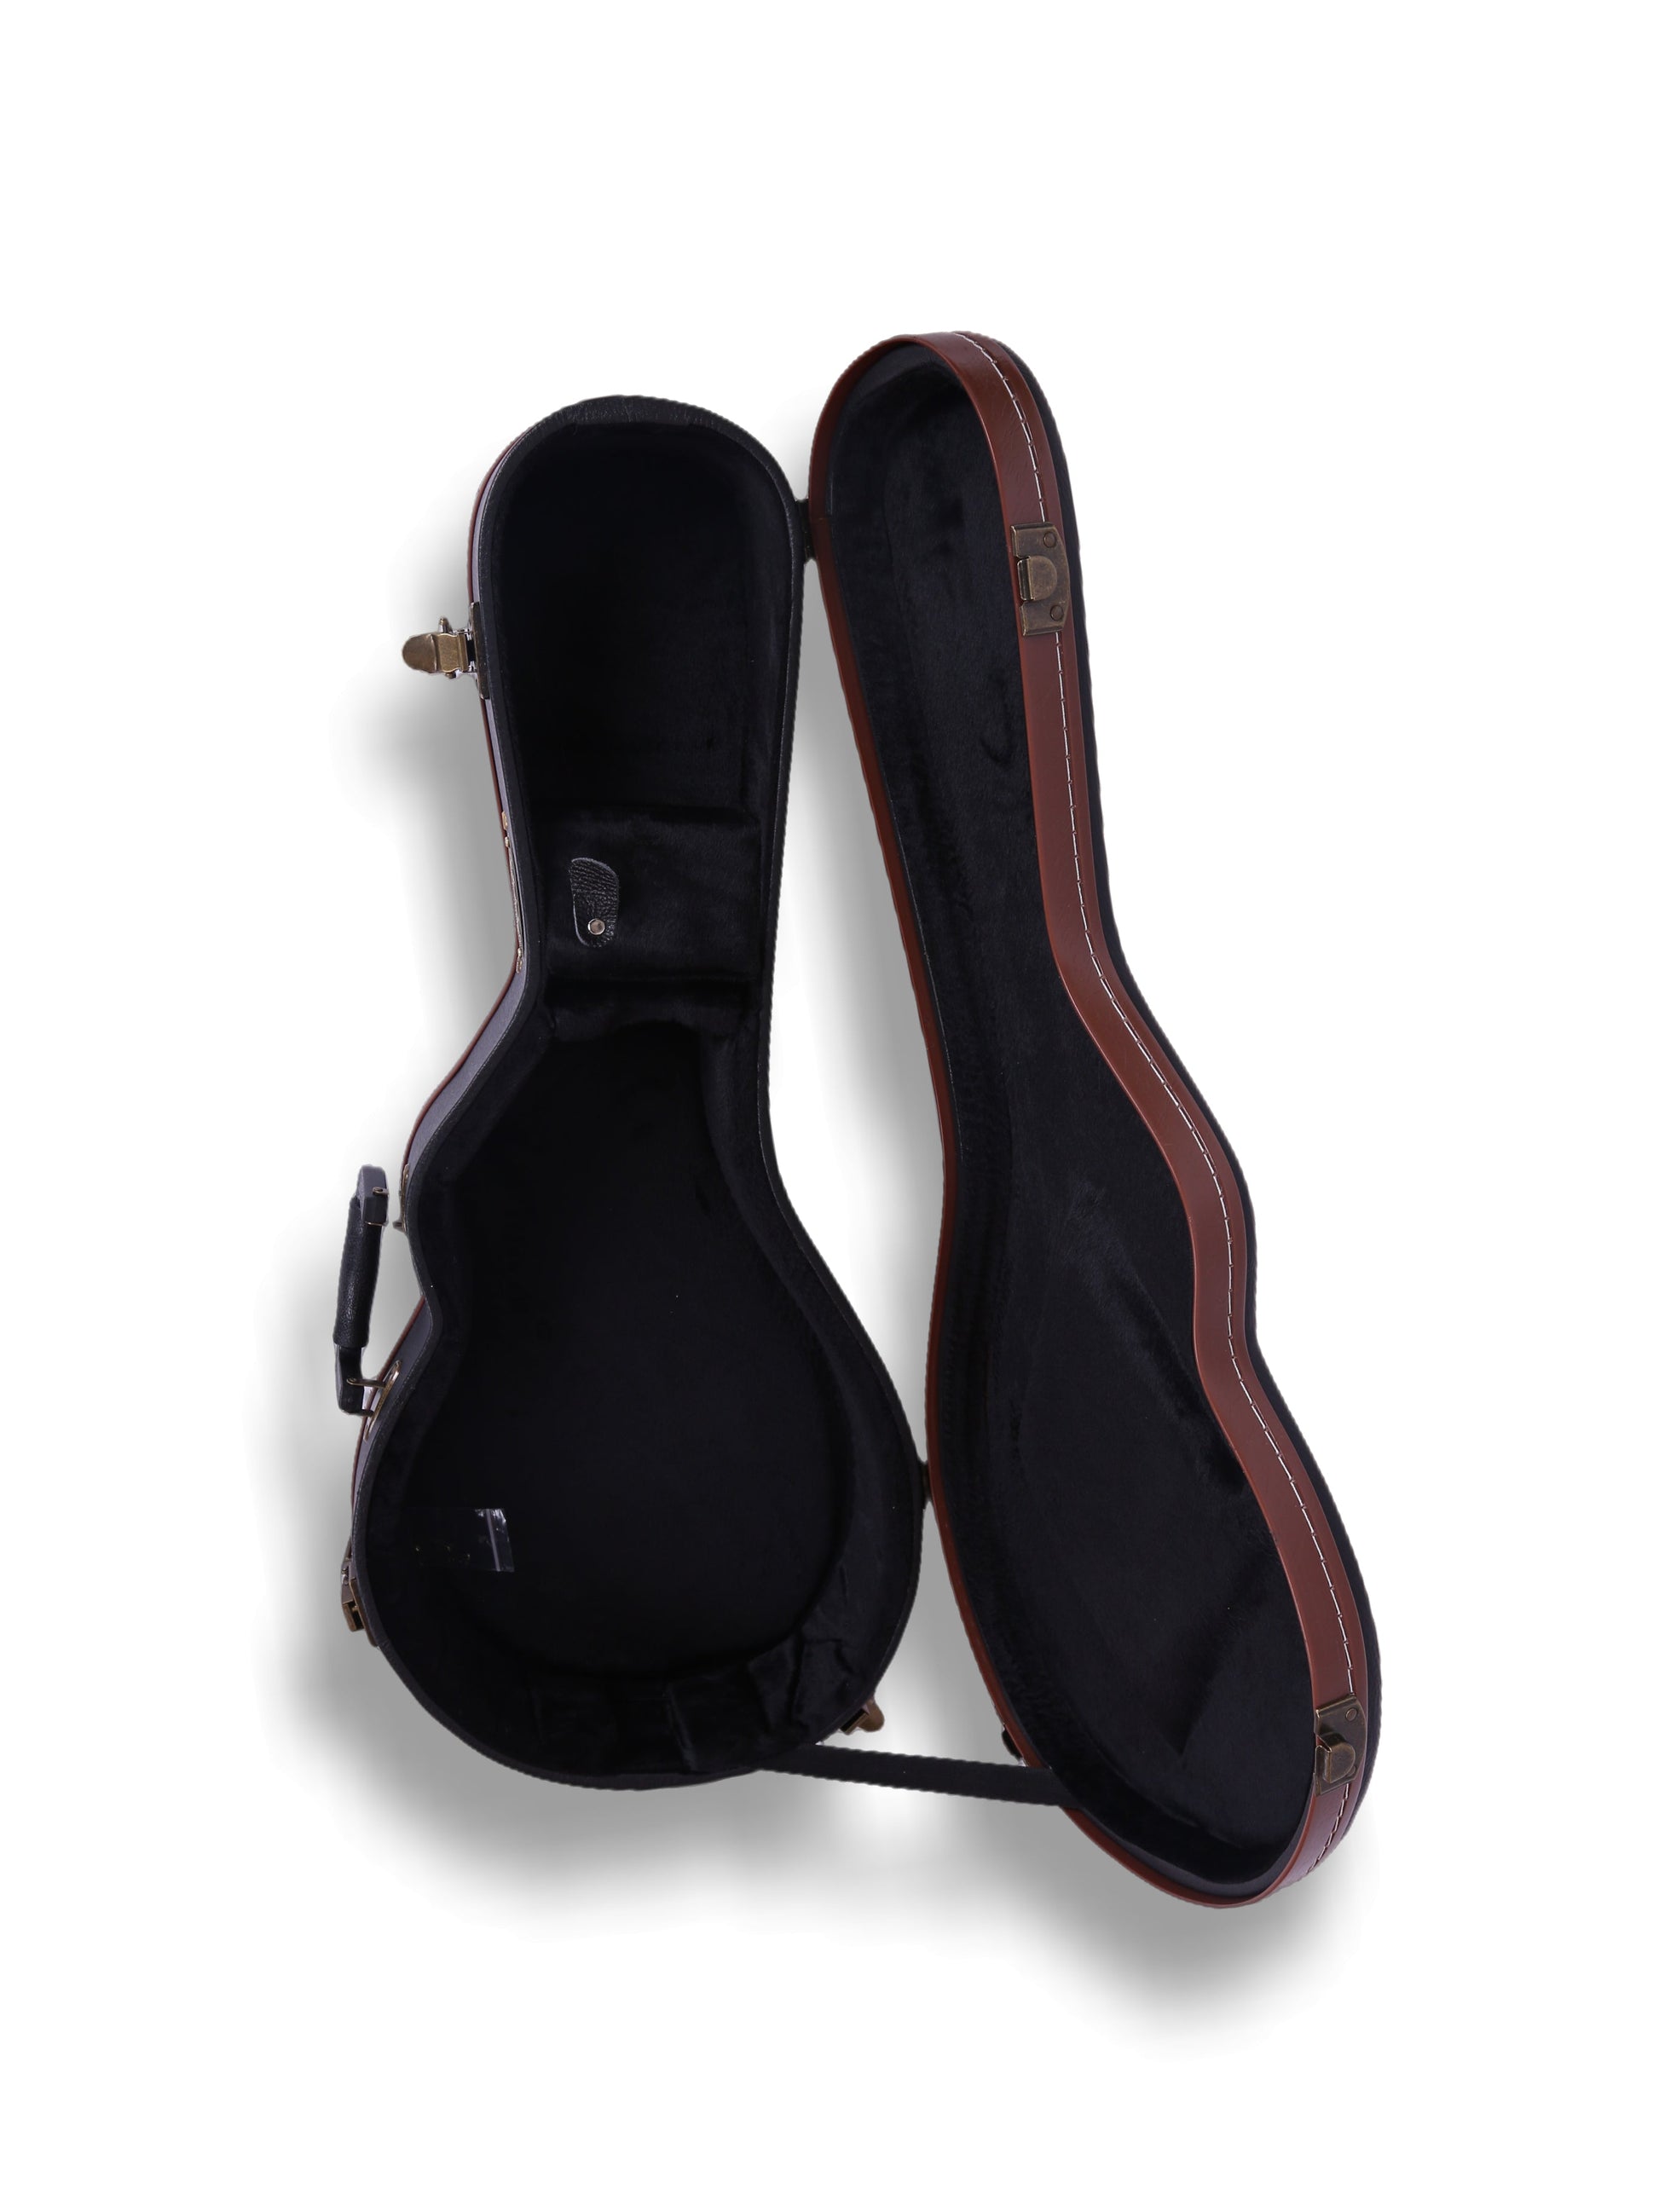 Haze Brand New Durable Hard Case For Mandolin Lockable with Key Black HK-19601MDF